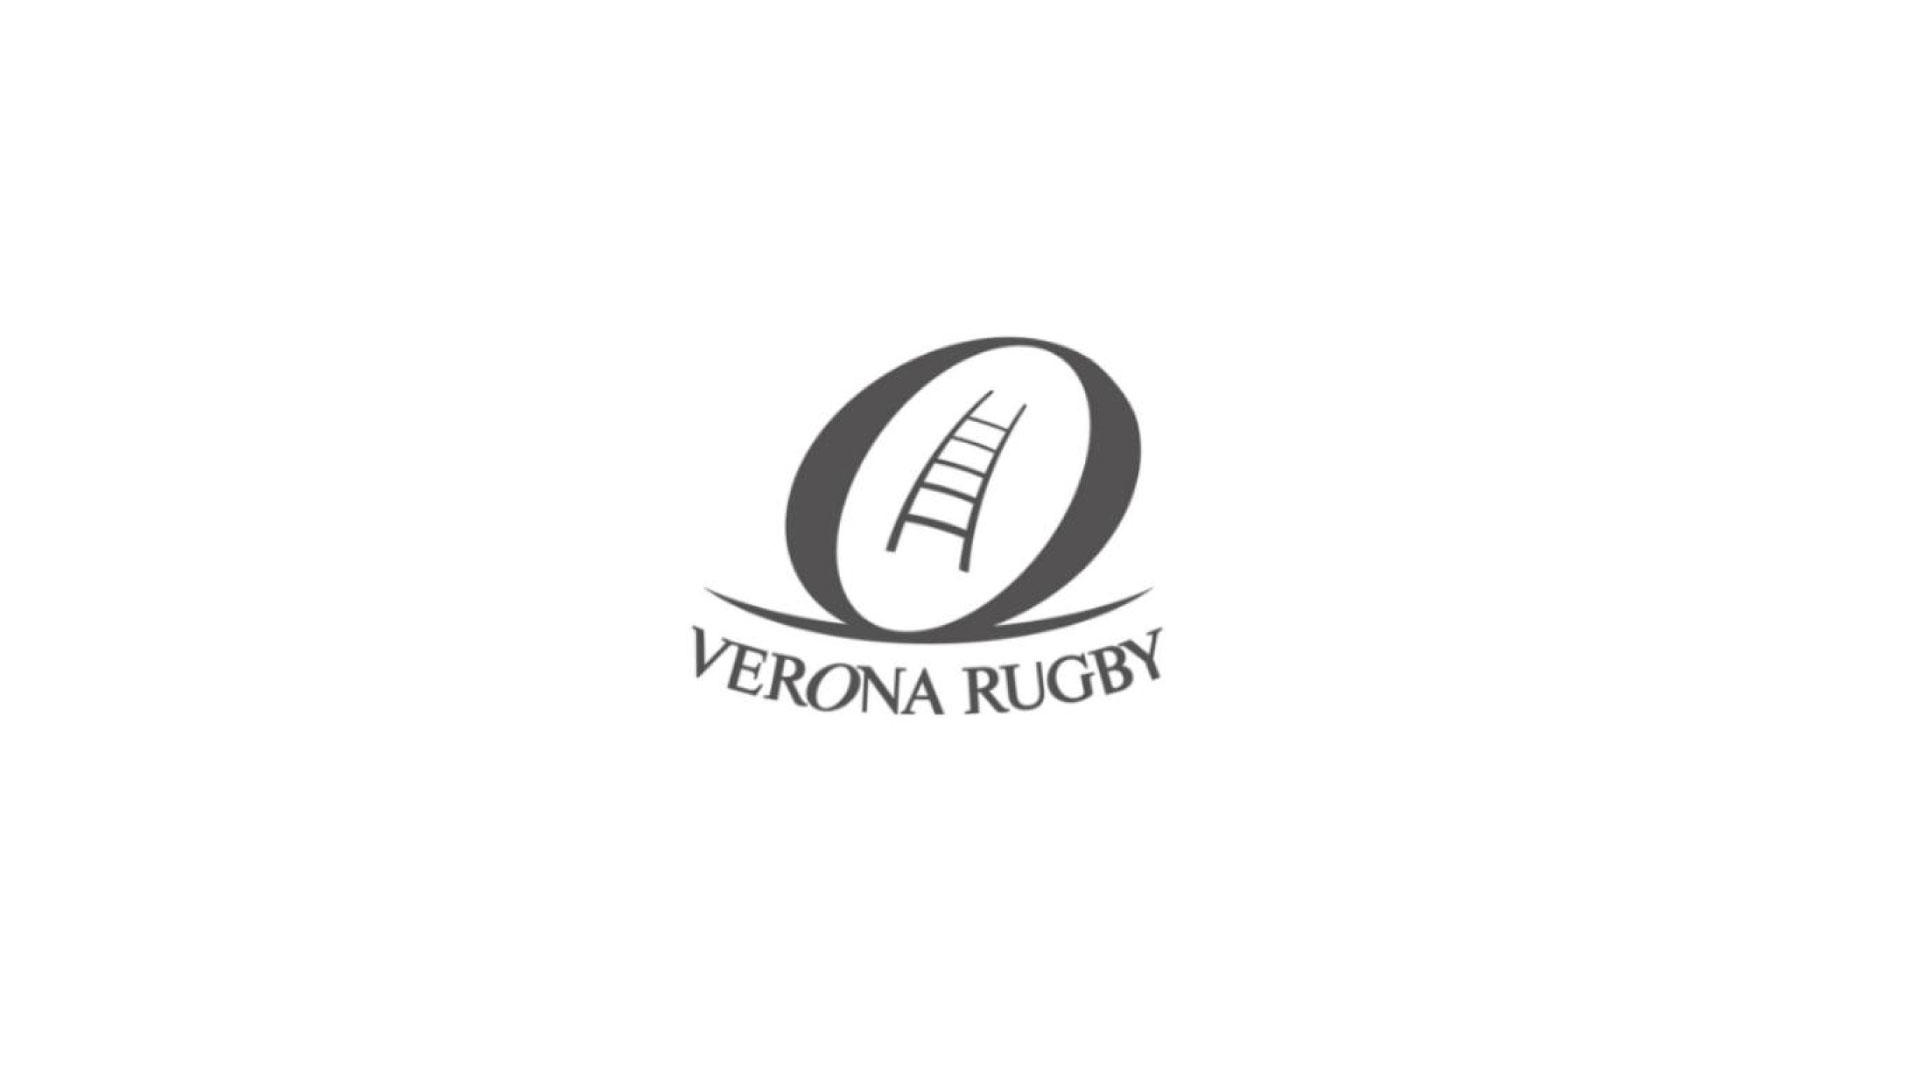 Verona Rugby